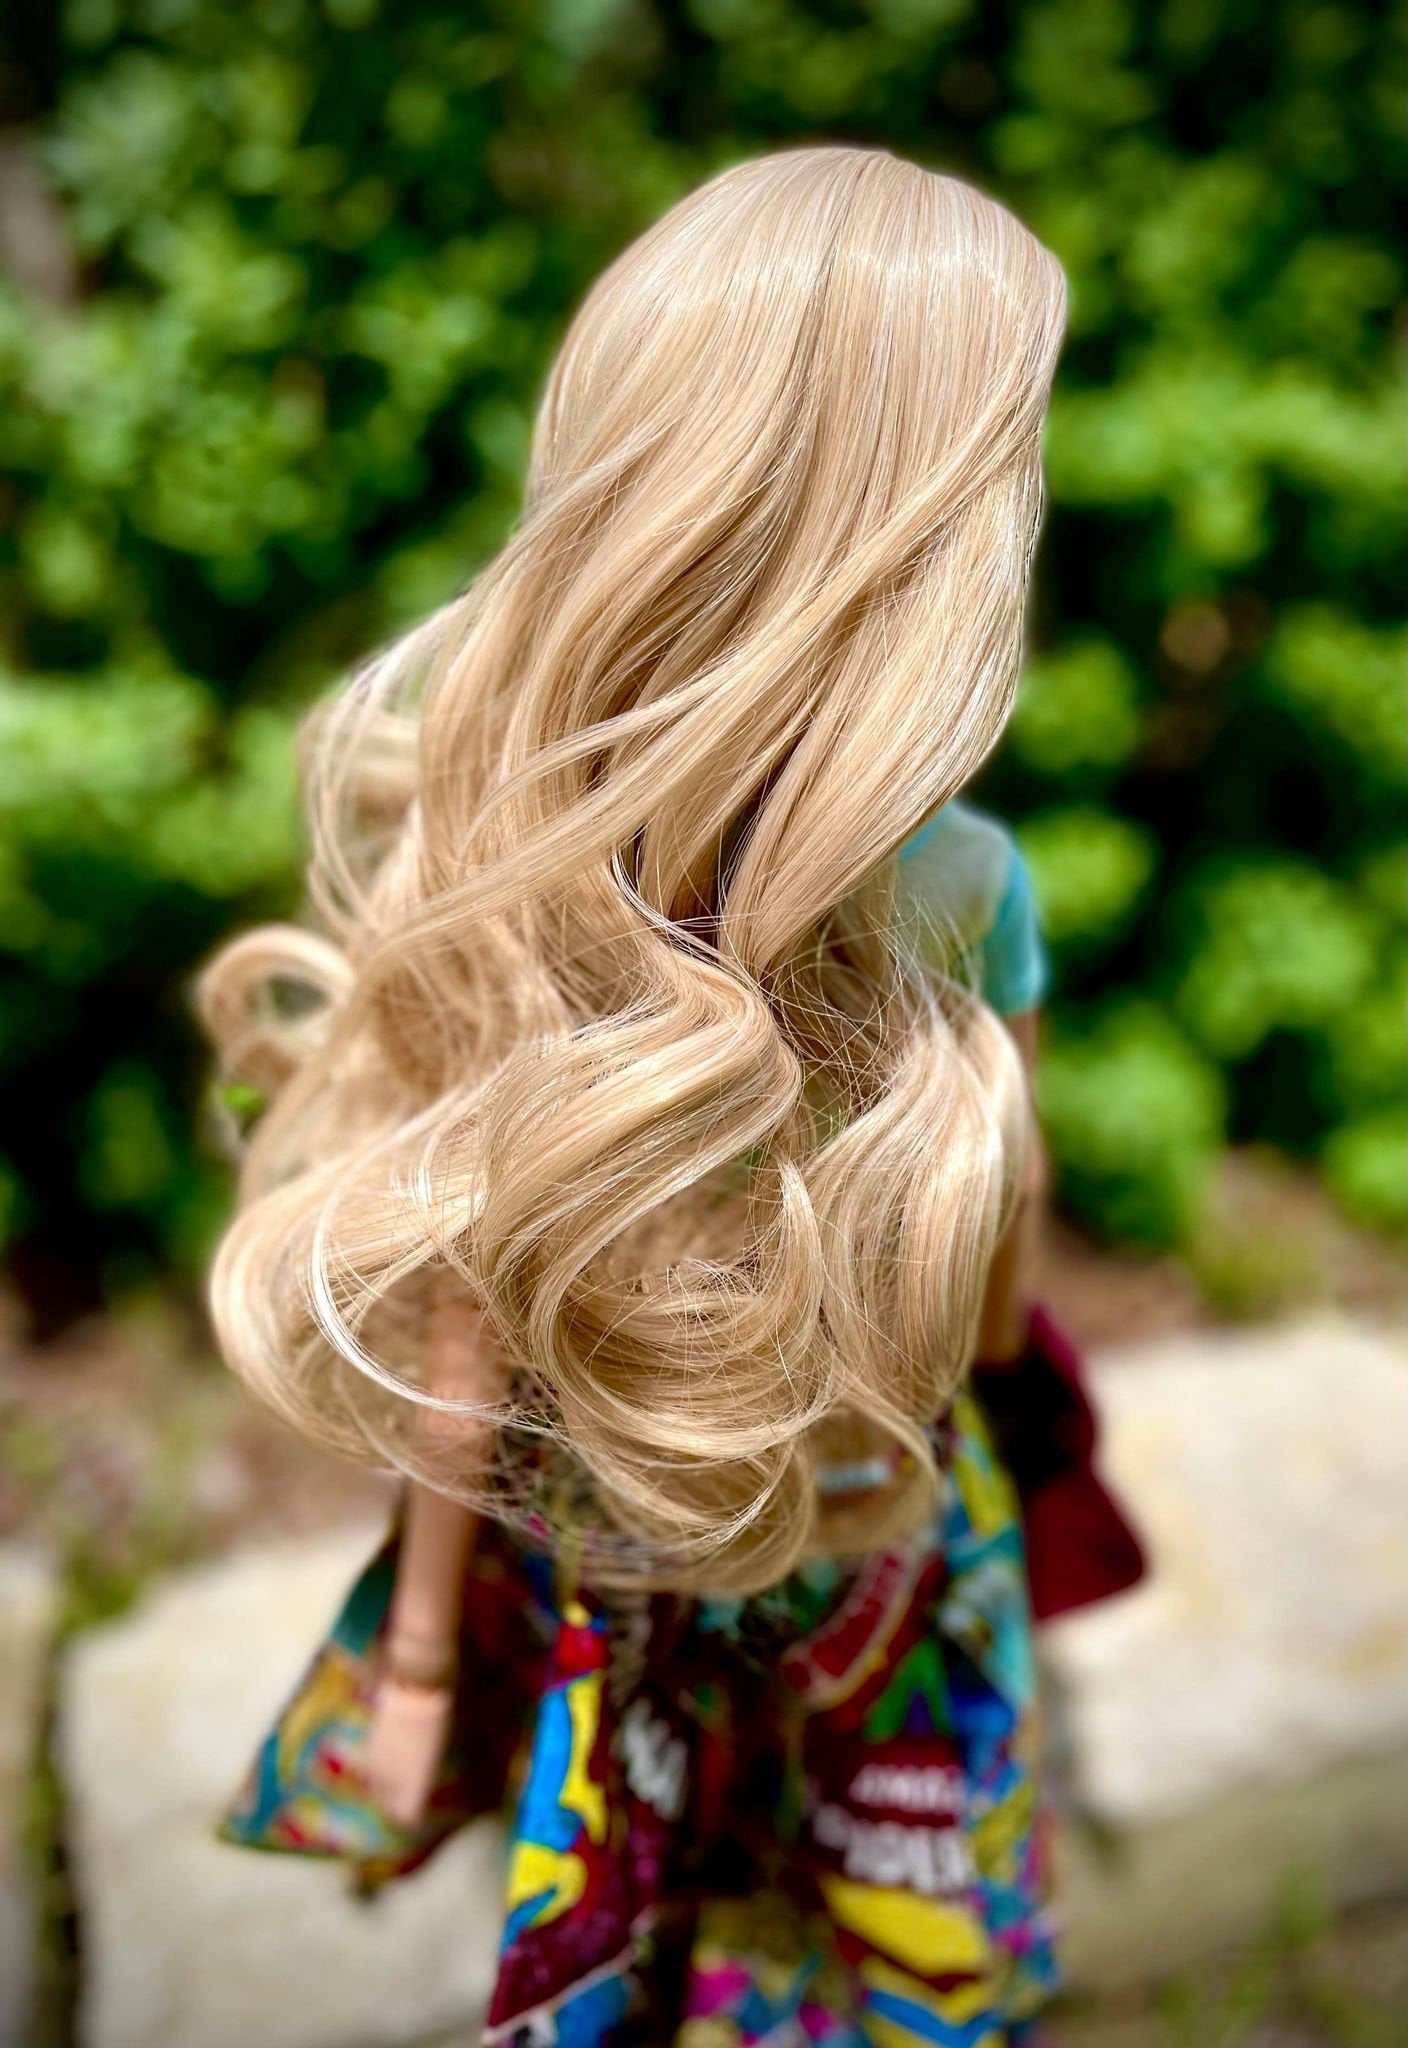 Custom doll Wig for Smart Dolls- Heat Safe - Tangle Resistant- 8.5" head size of Bjd, SD, Dollfie Dream dolls blonde curls